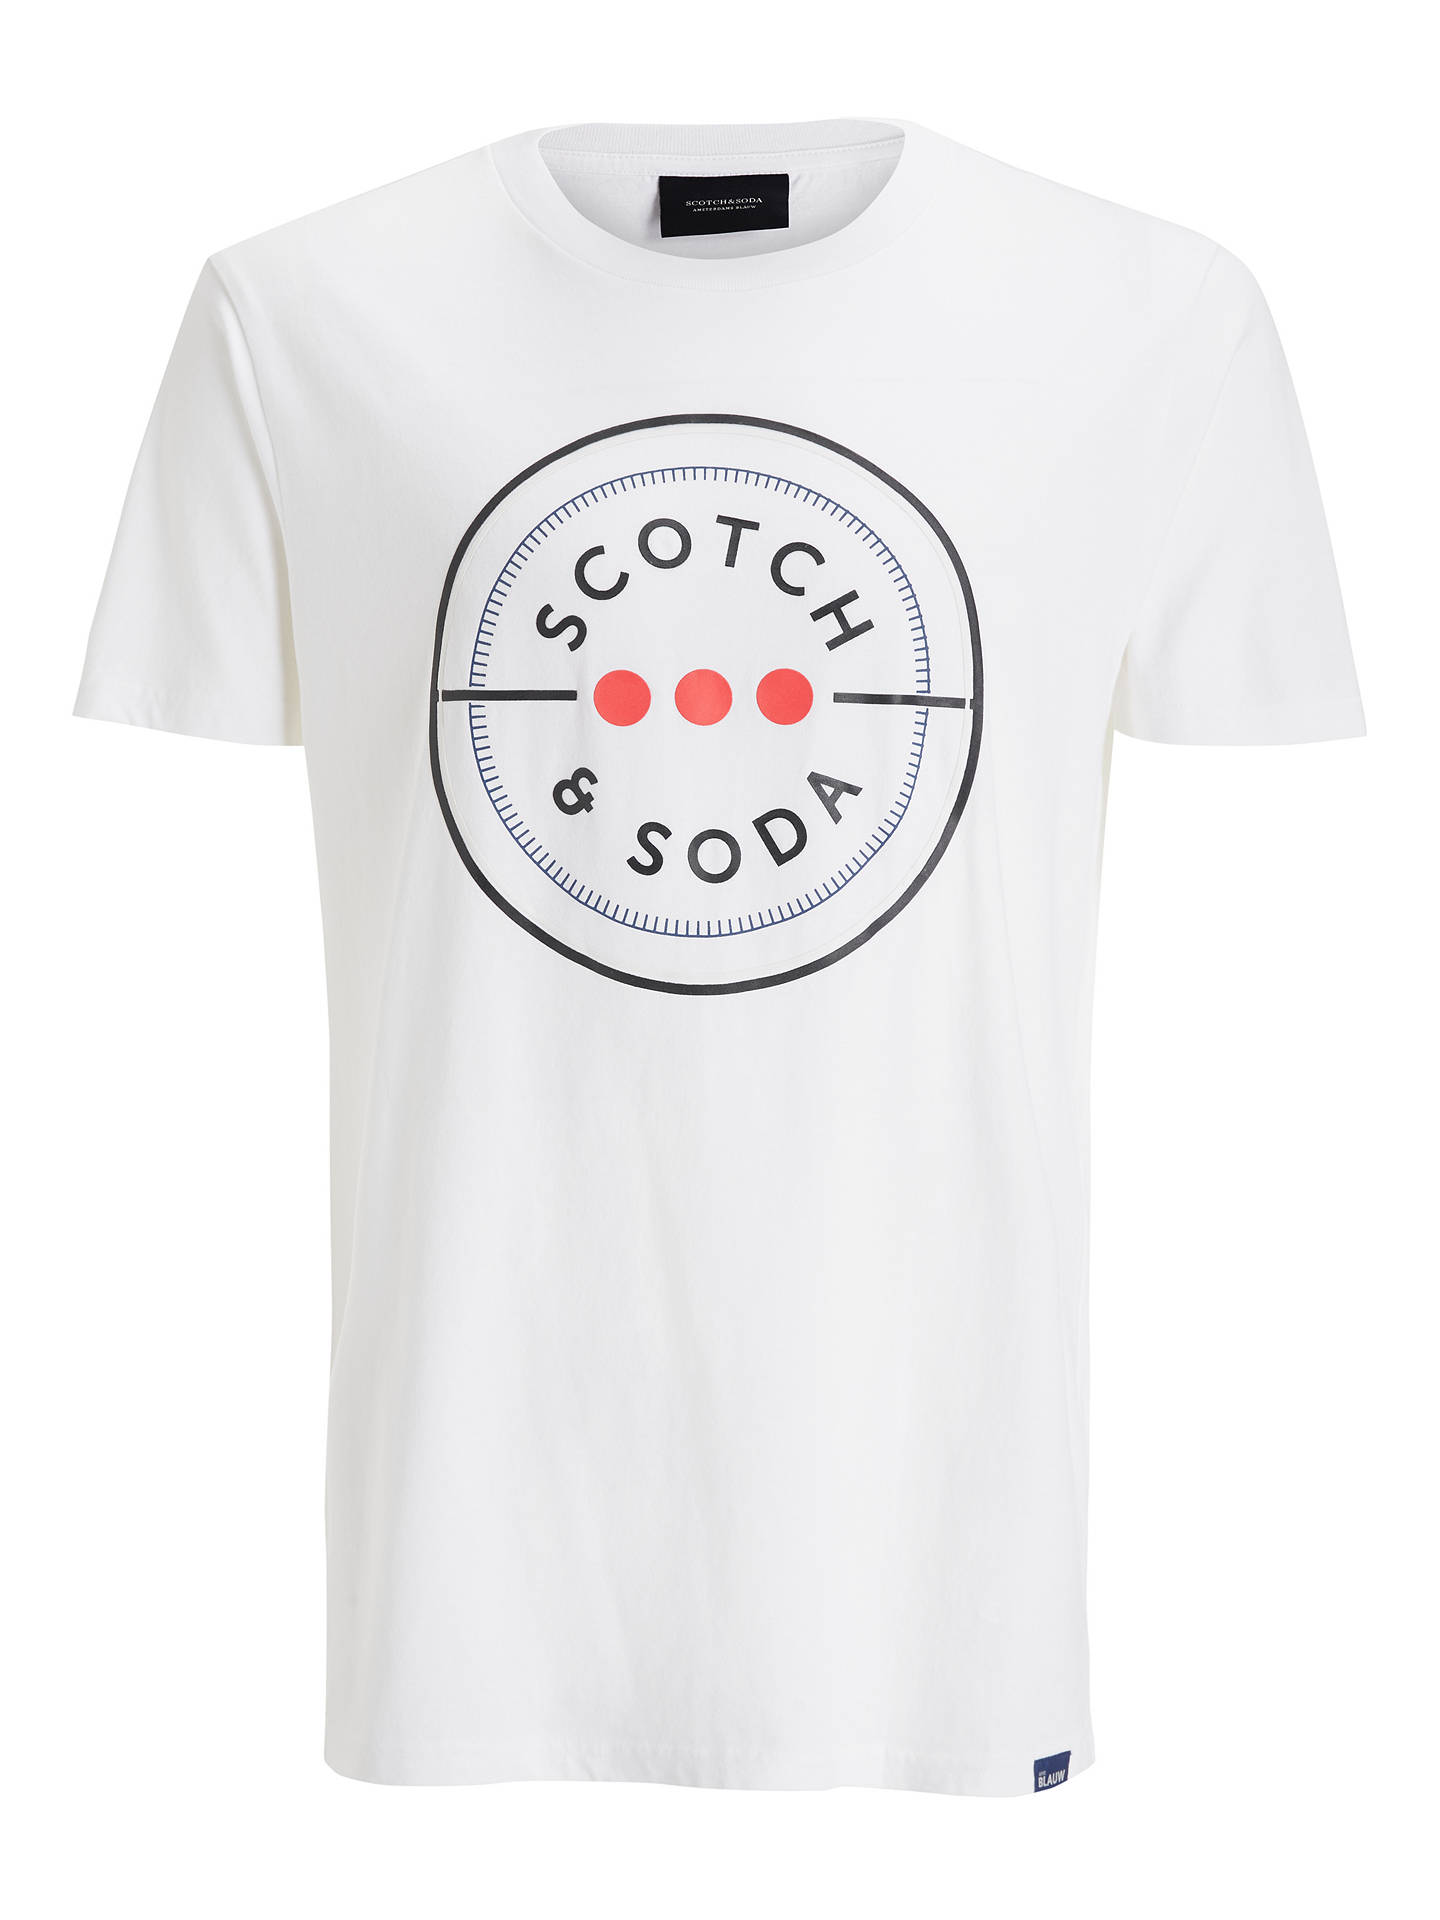 Scotch & Soda Graphic Print T-Shirt, White at John Lewis & Partners